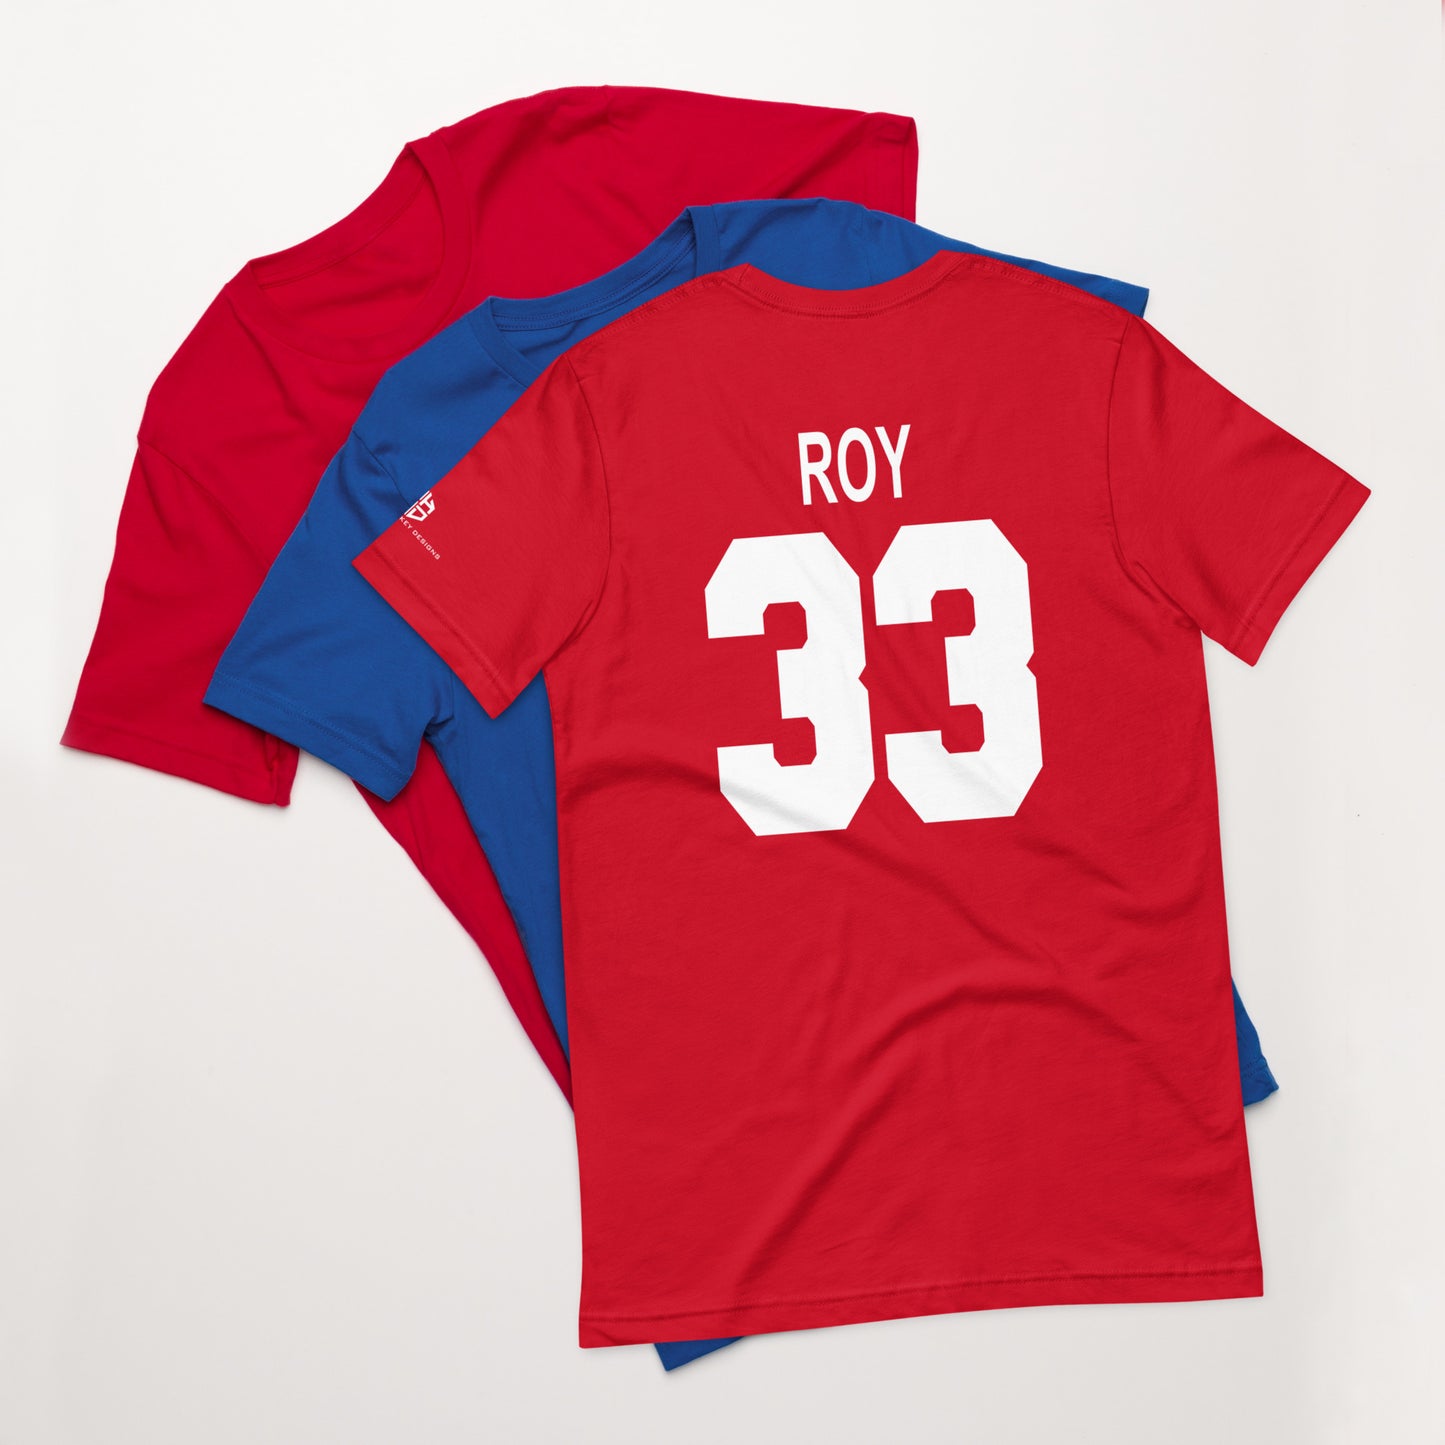 1993 Montreal Canadiens - Roy